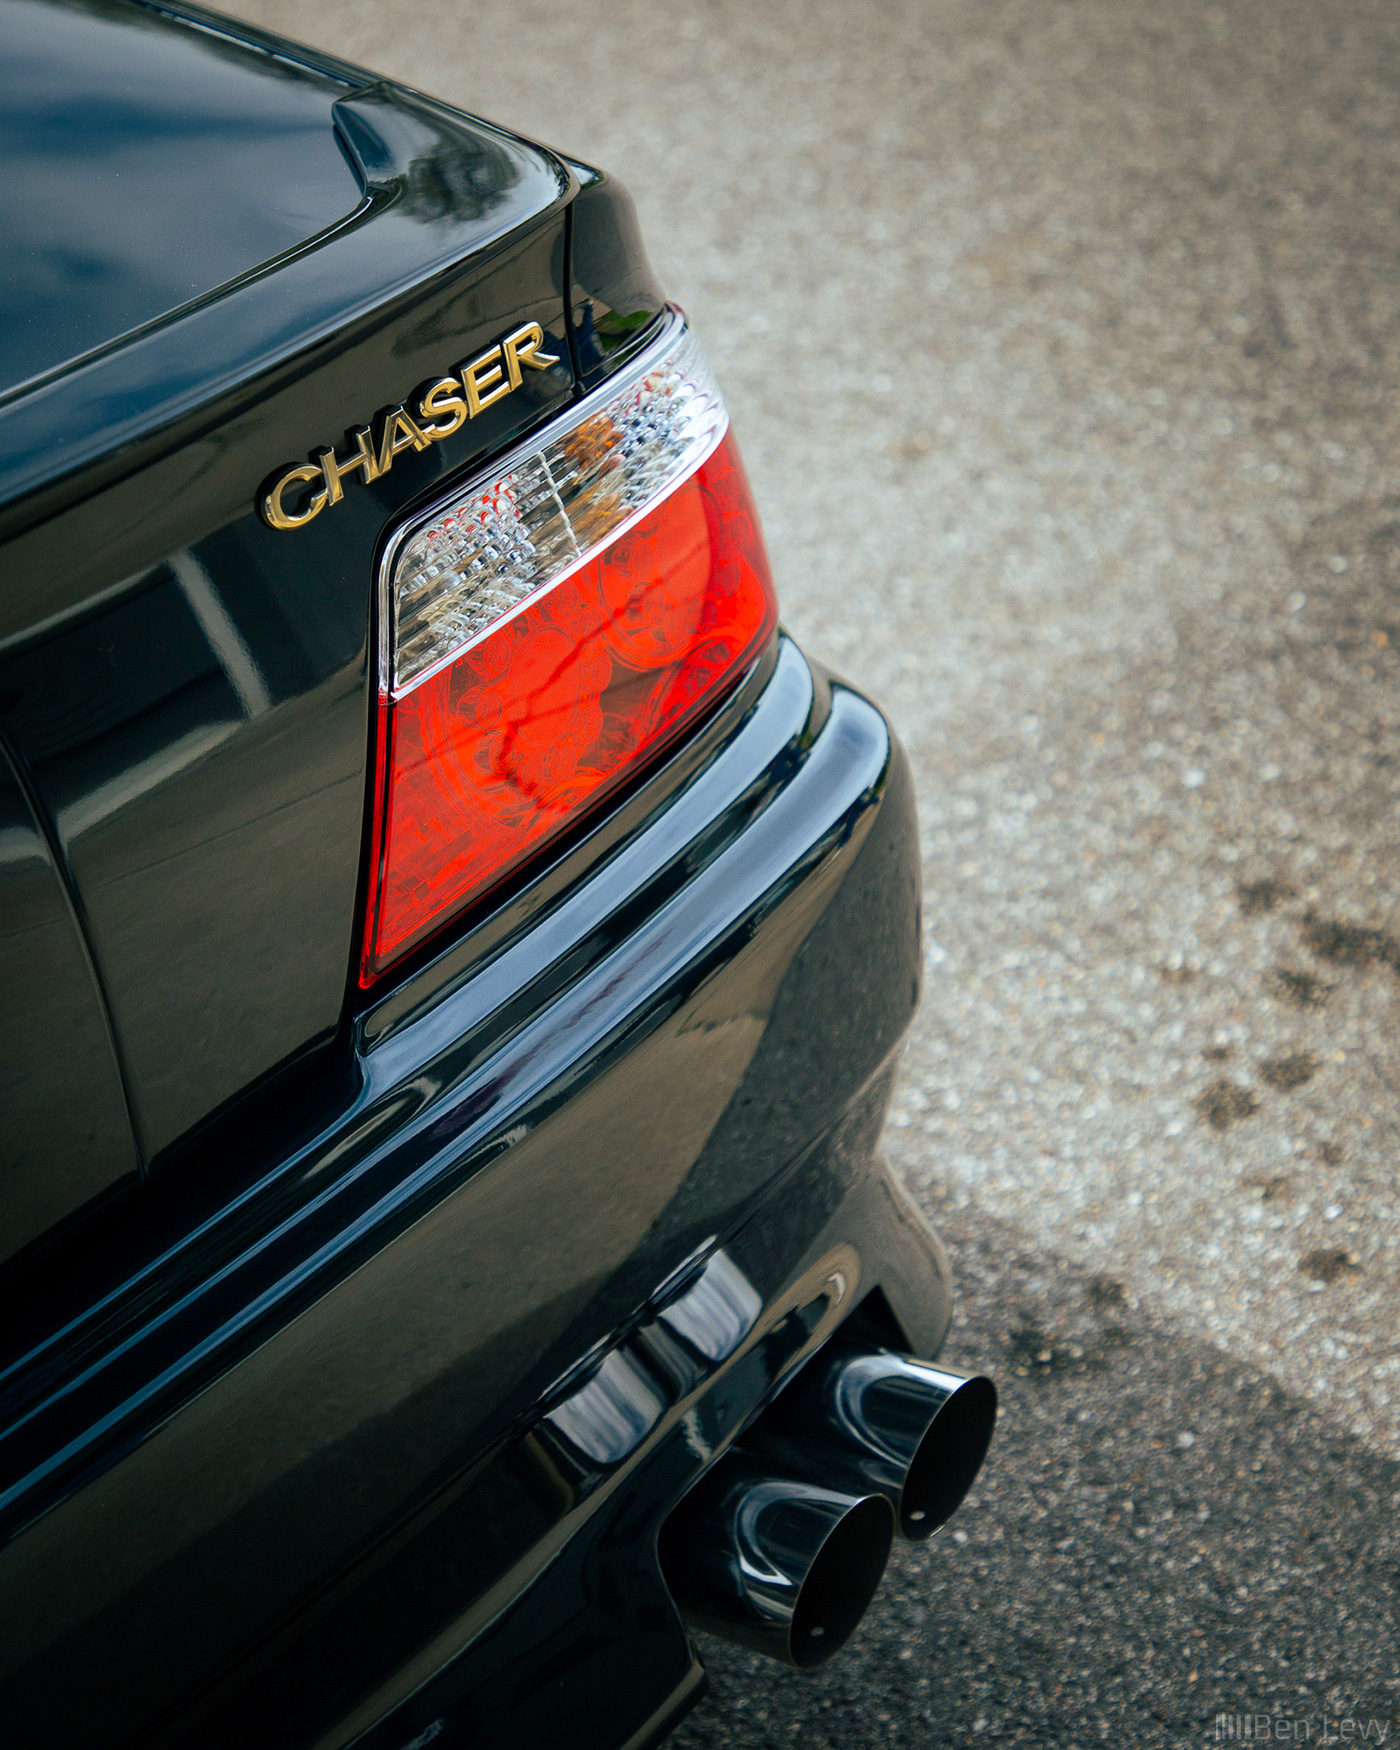 Gold Chaser Emblem on Green Toyota Chaser